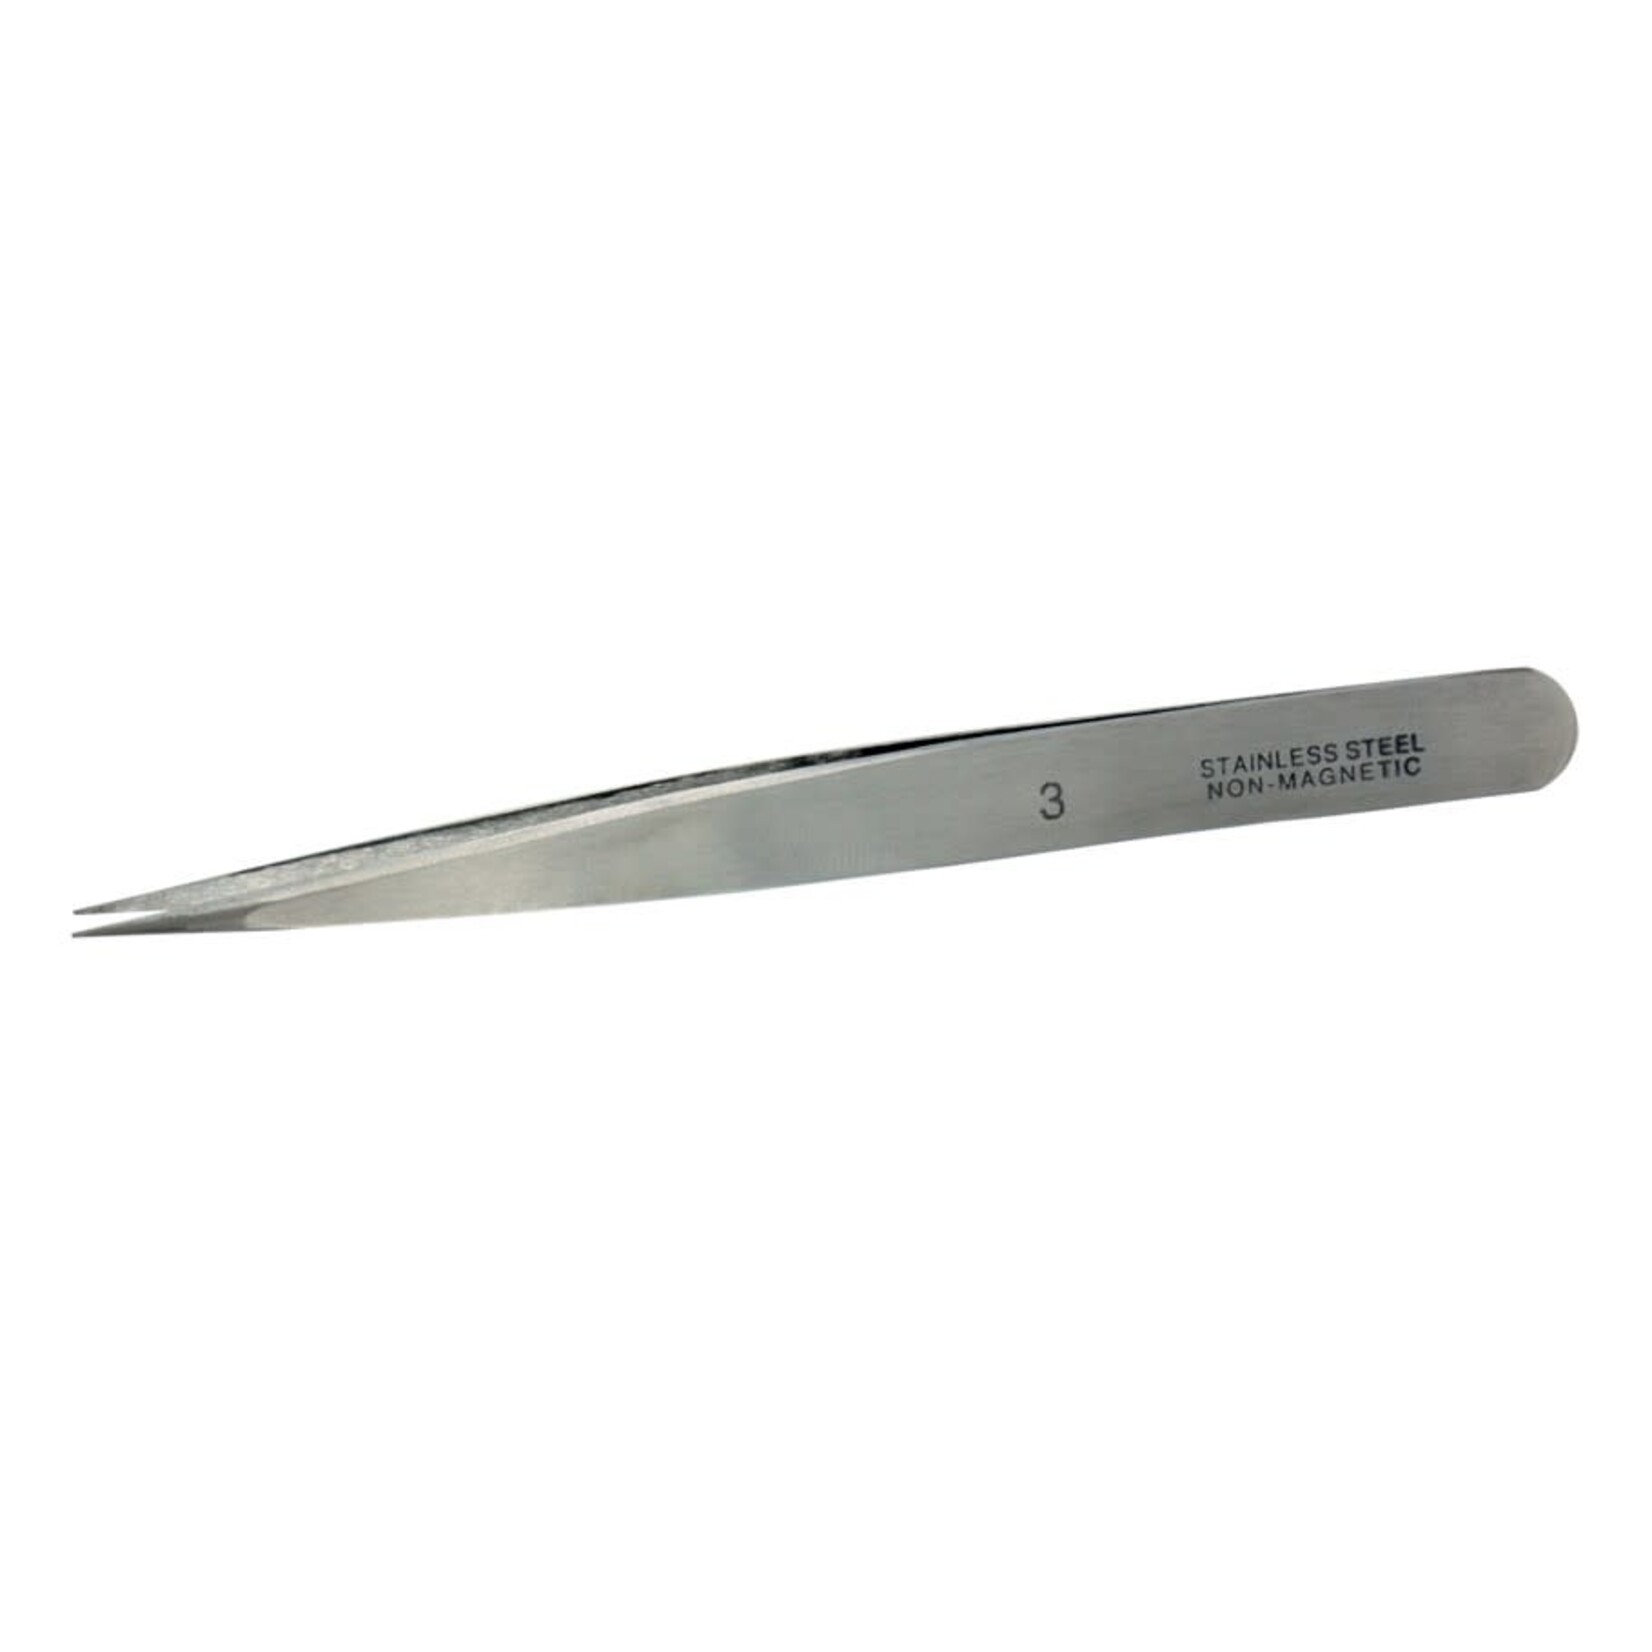 Vallejo Tool: #3 Stainless steel tweezers